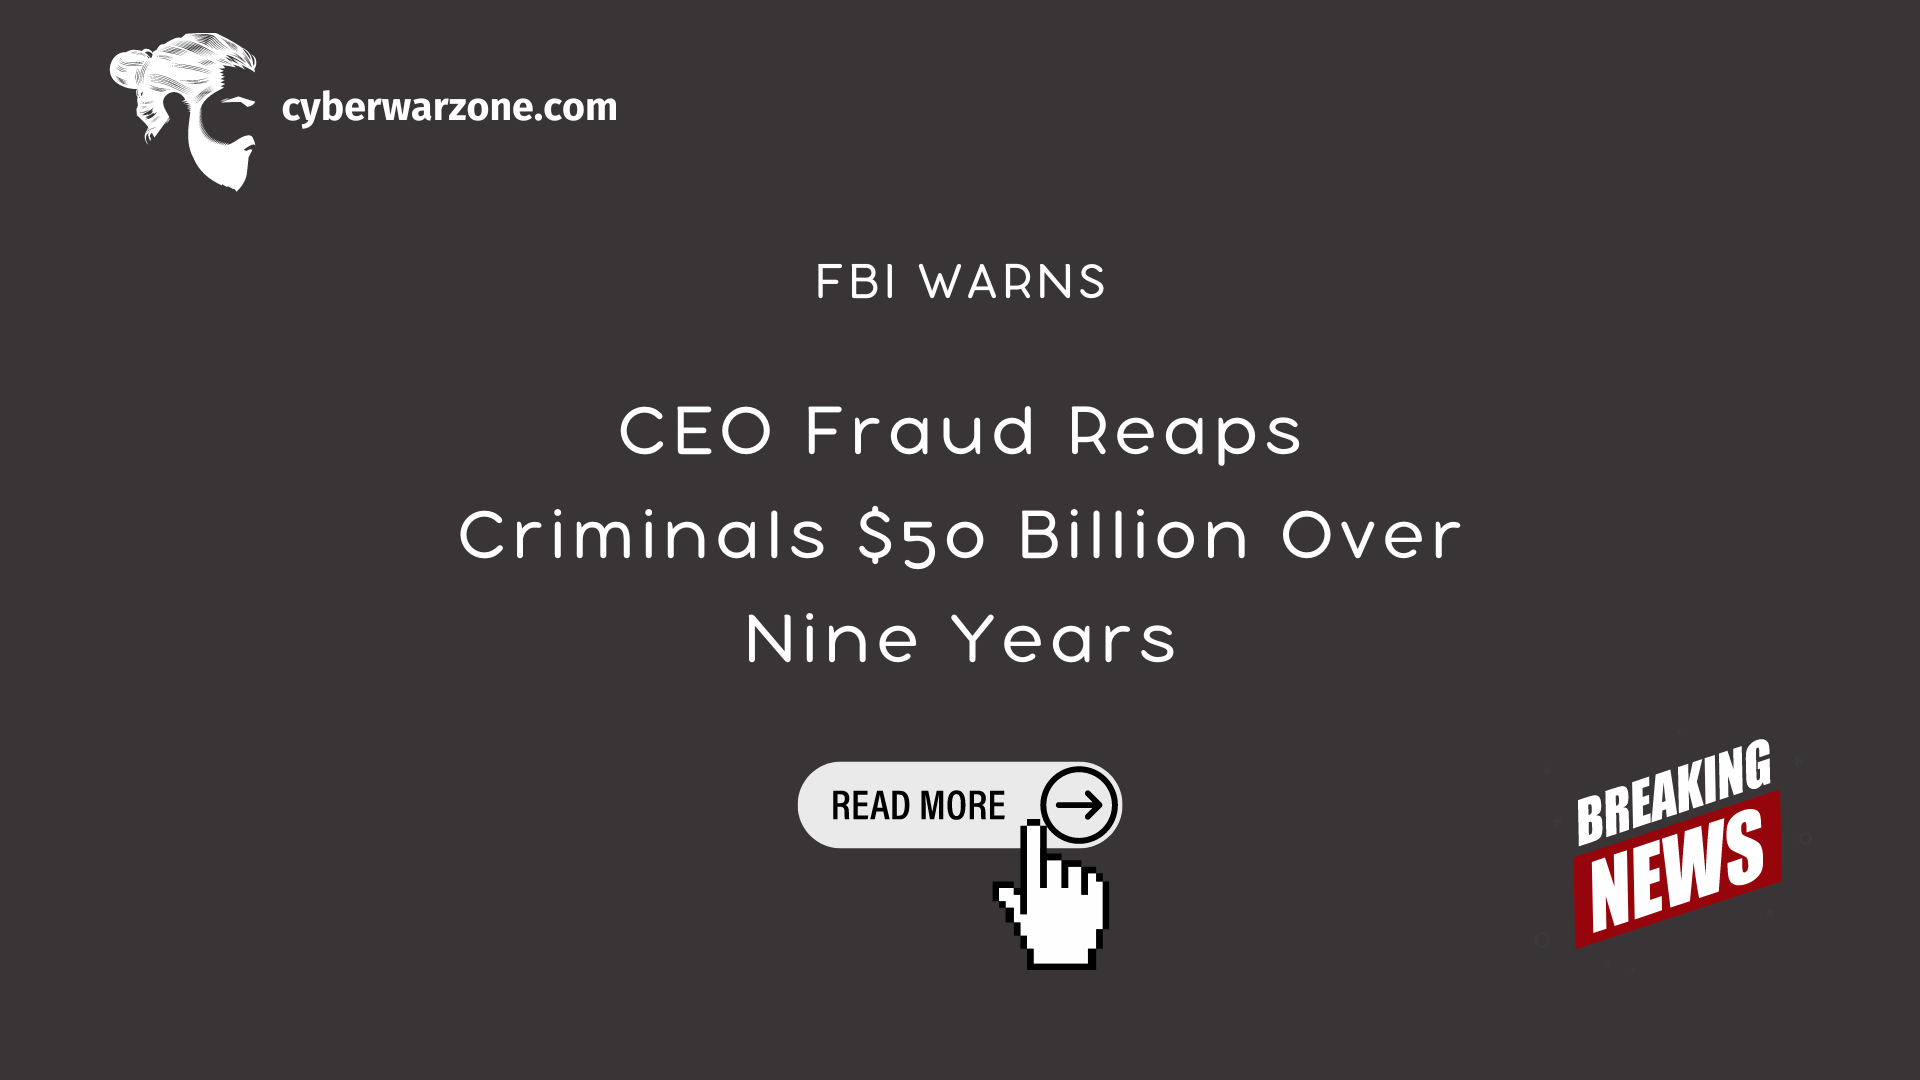 CEO Fraud Reaps Criminals $50 Billion Over Nine Years, Warns FBI